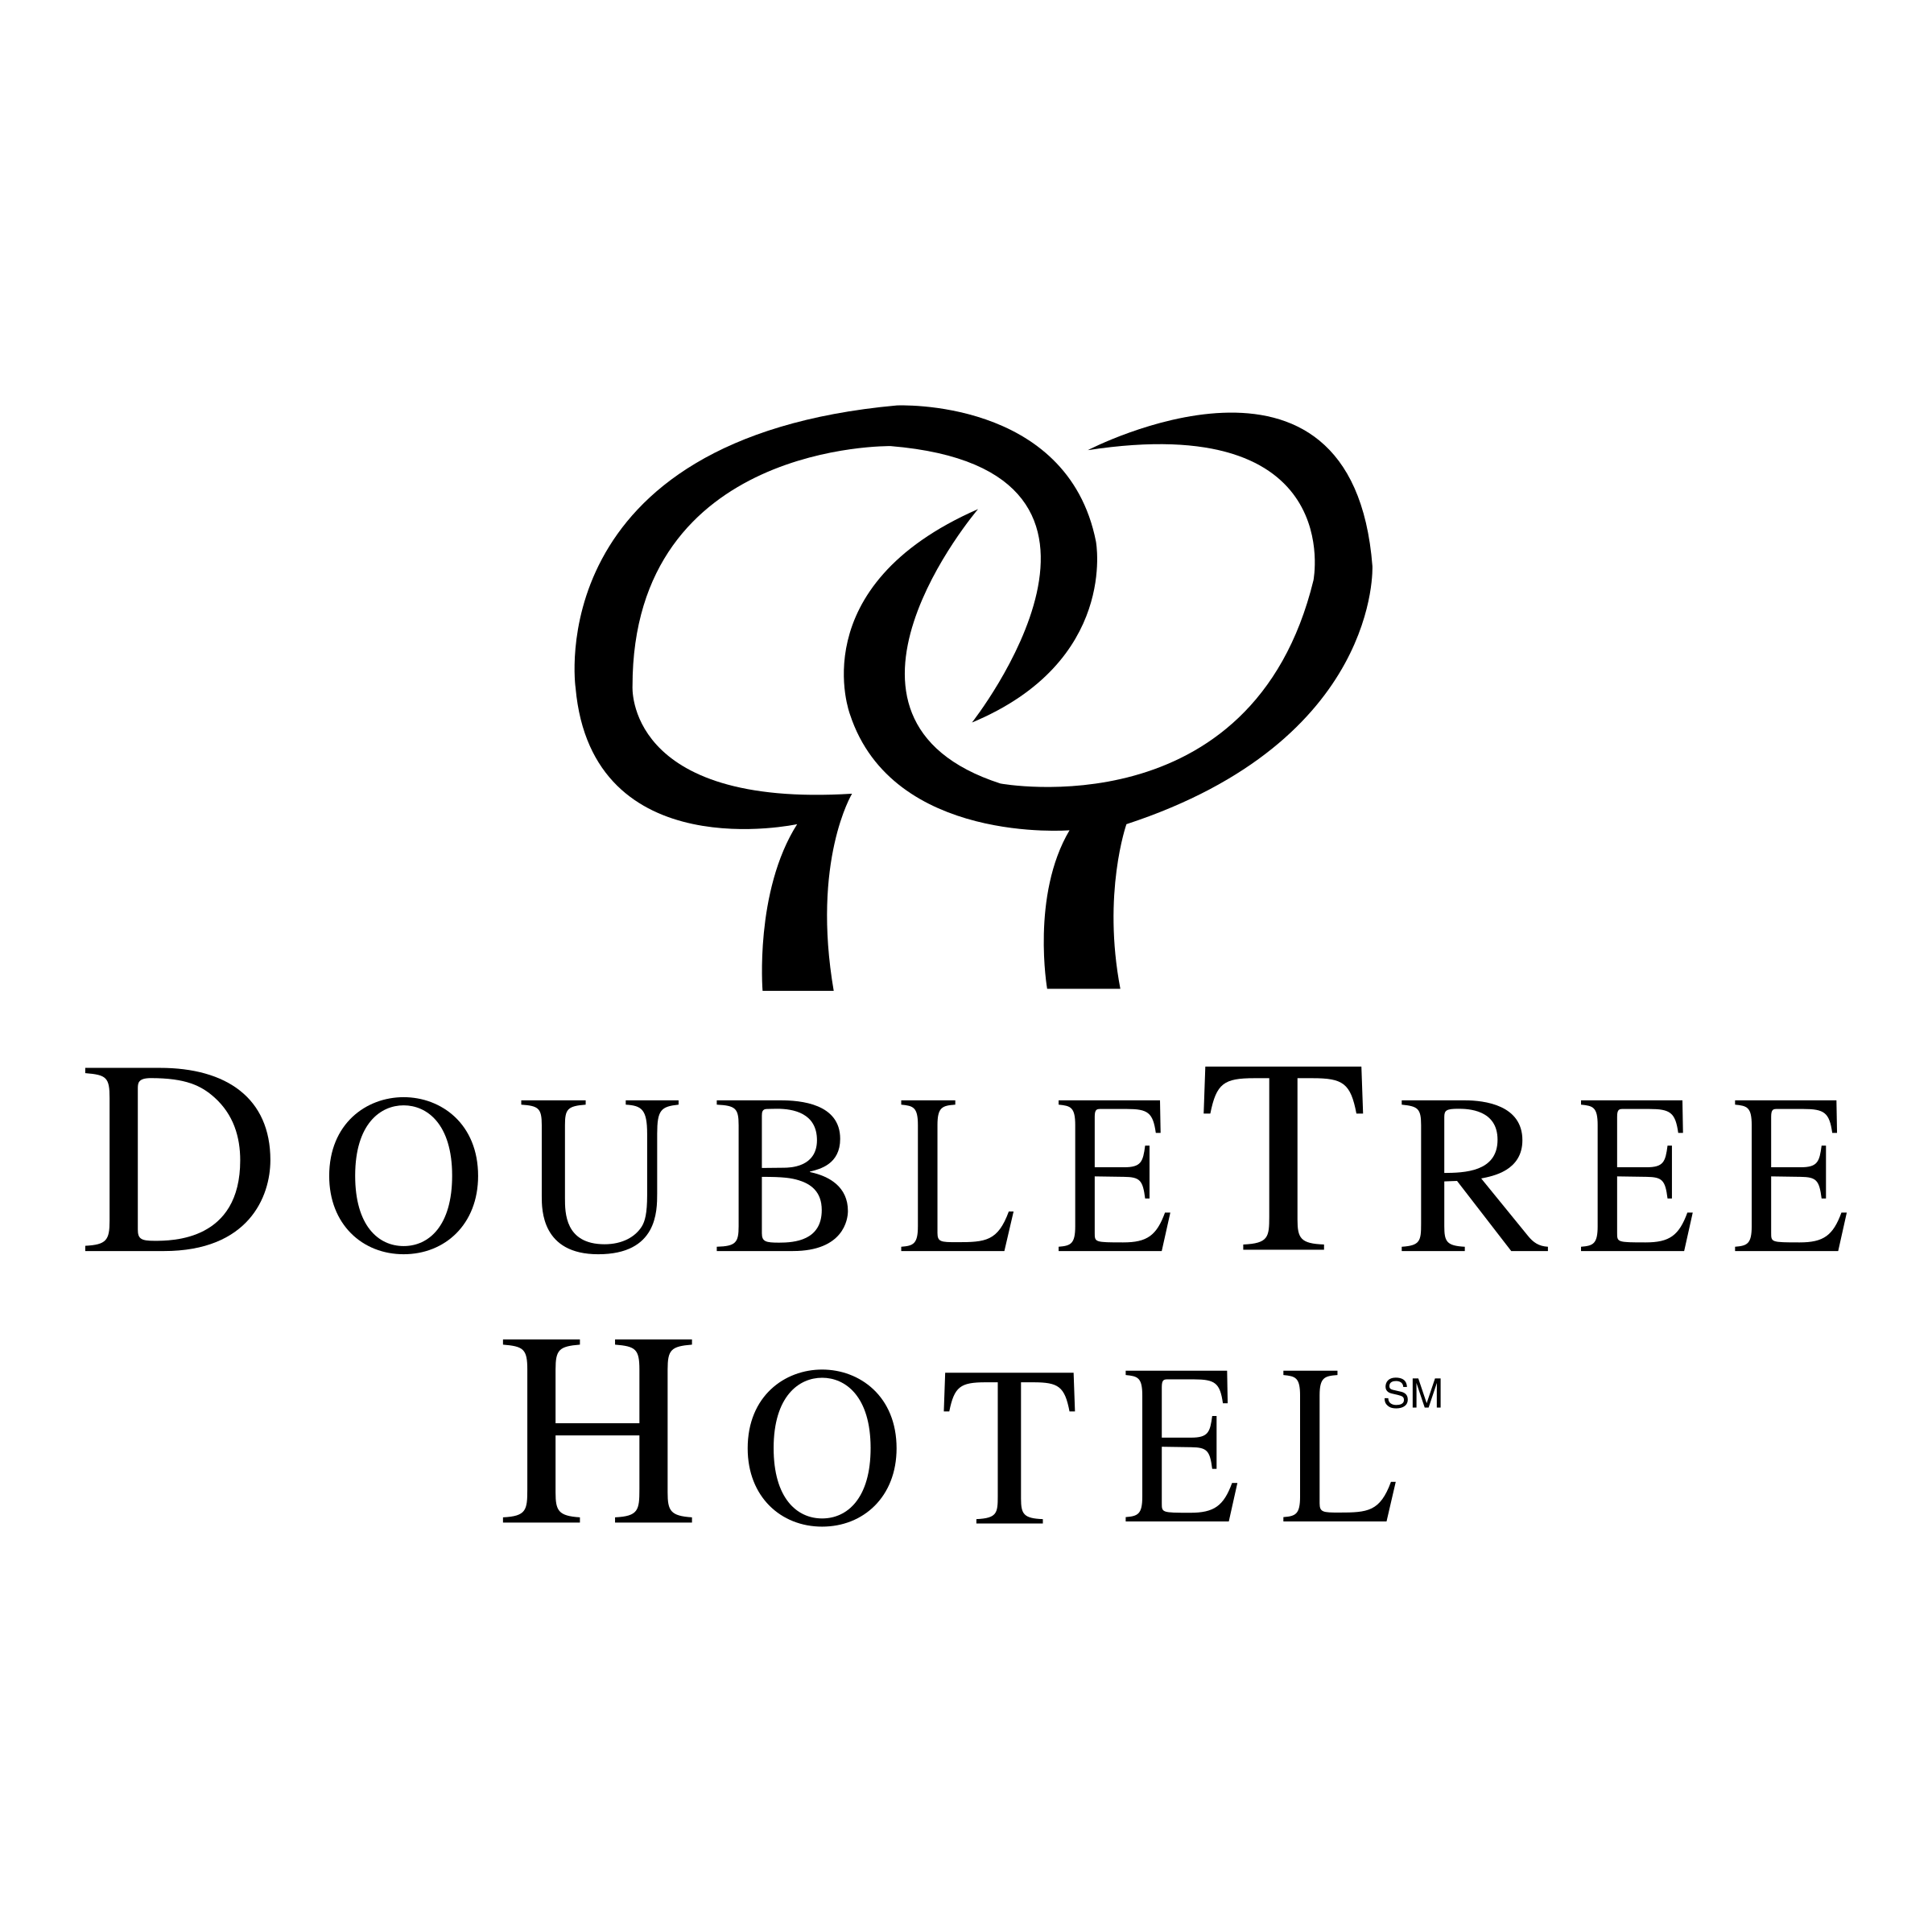 Doubletree Hotel Logo - DoubleTree Hotel Logo PNG Transparent & SVG Vector - Freebie Supply